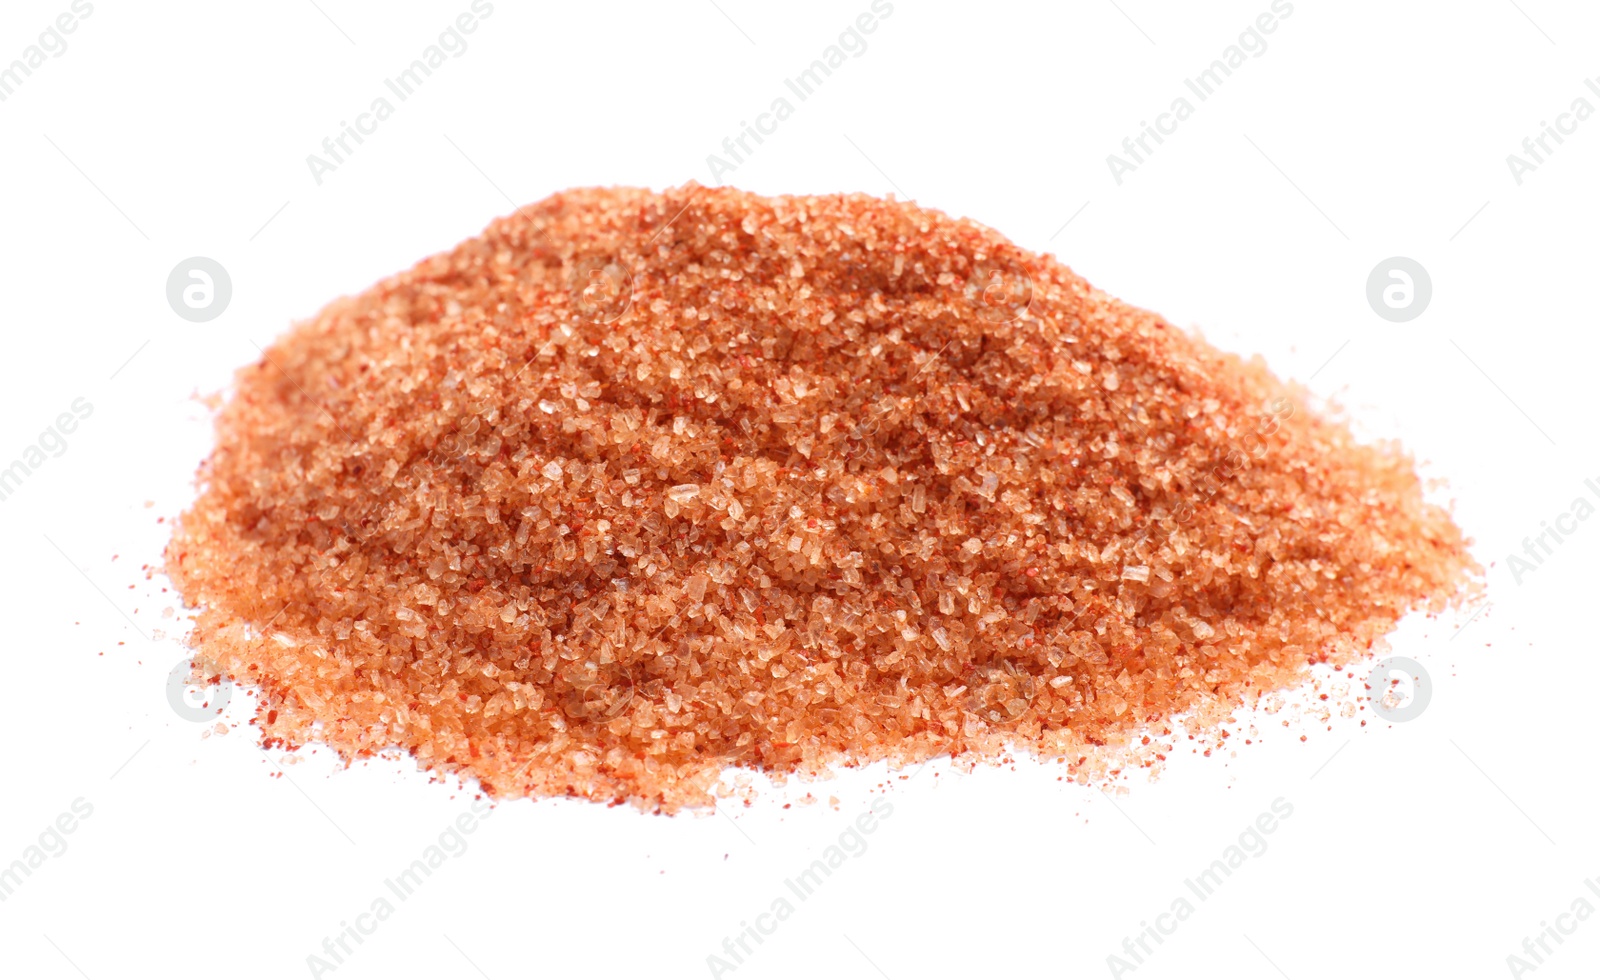 Photo of Heap of orange salt on white background